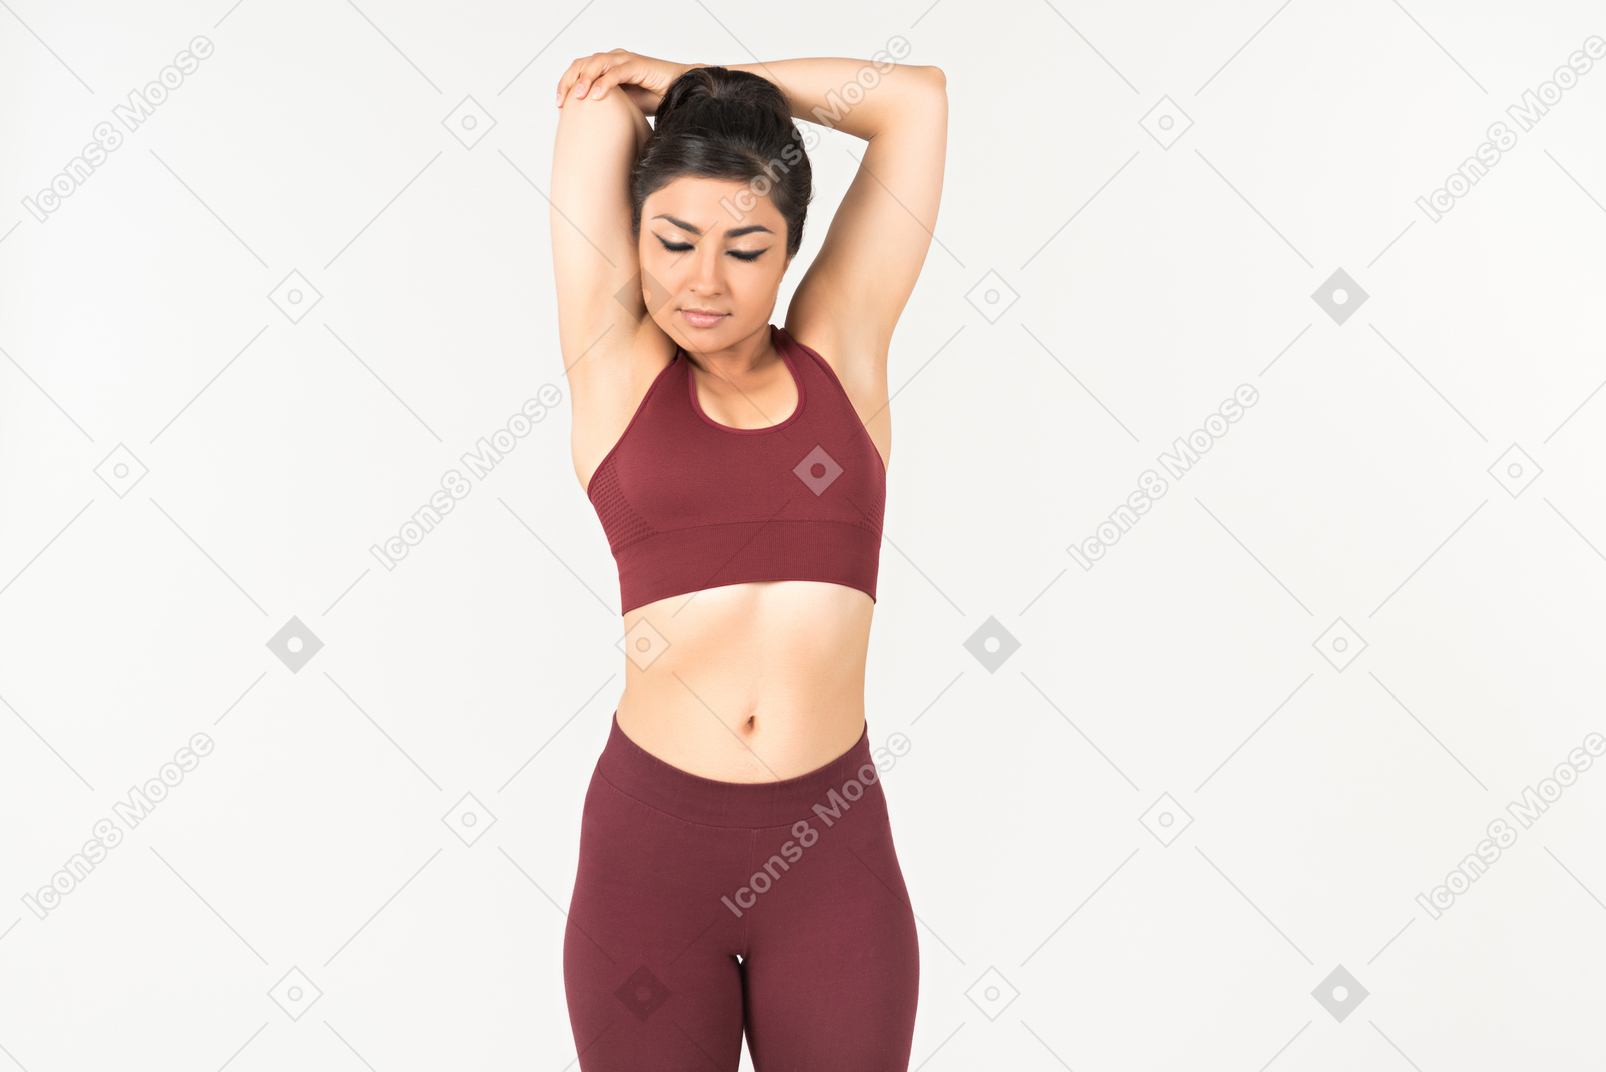 Indian woman in sportswear warming up